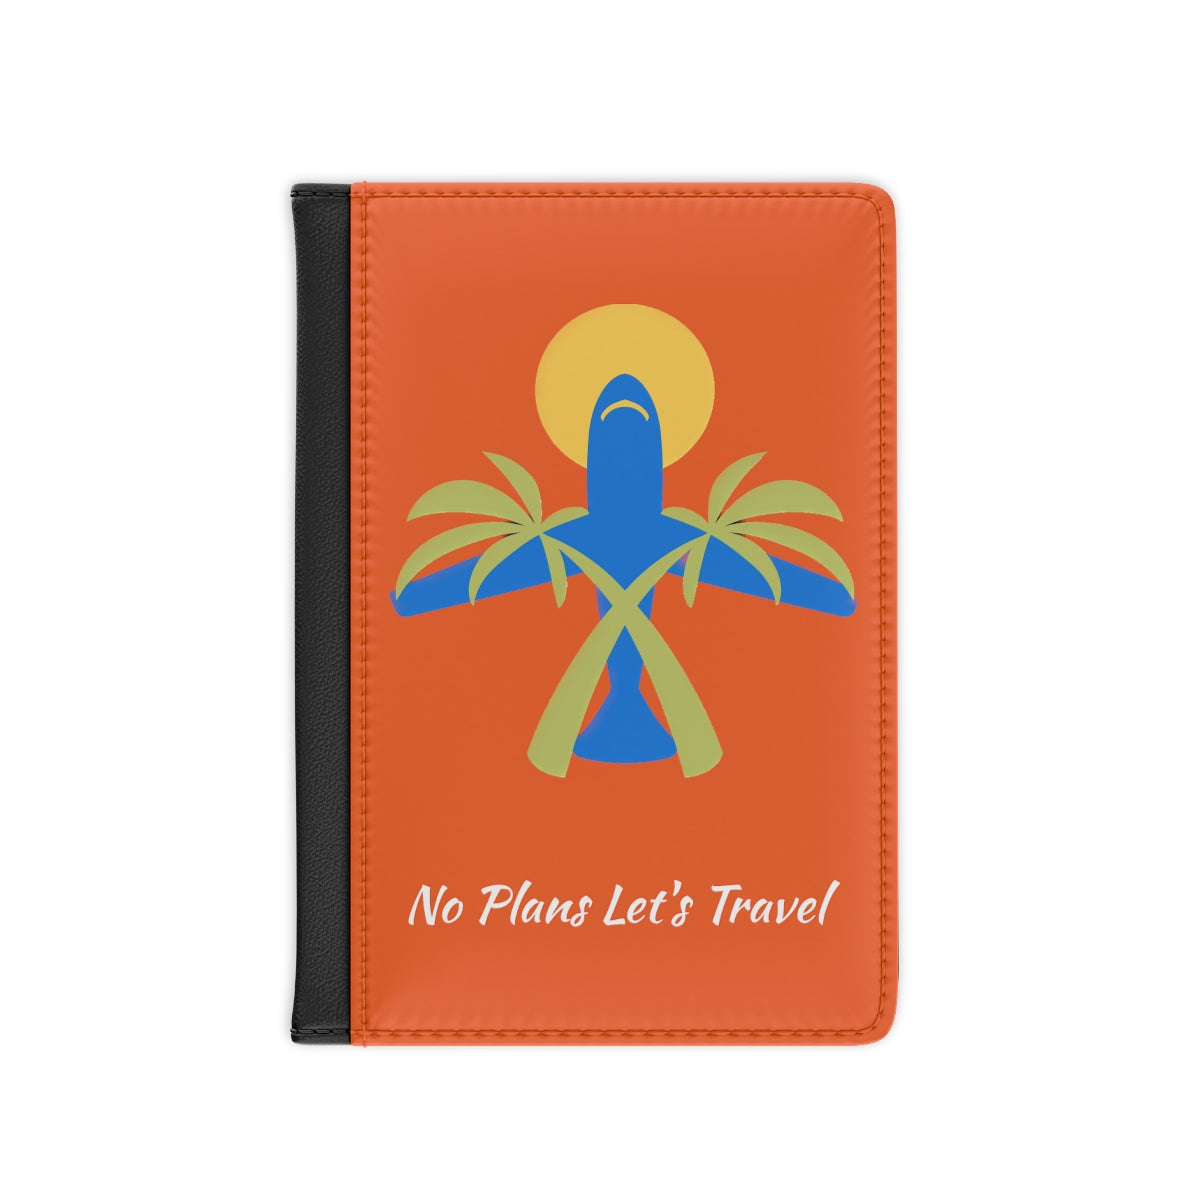 (Orange) No Plans Let's Travel Passport Cover